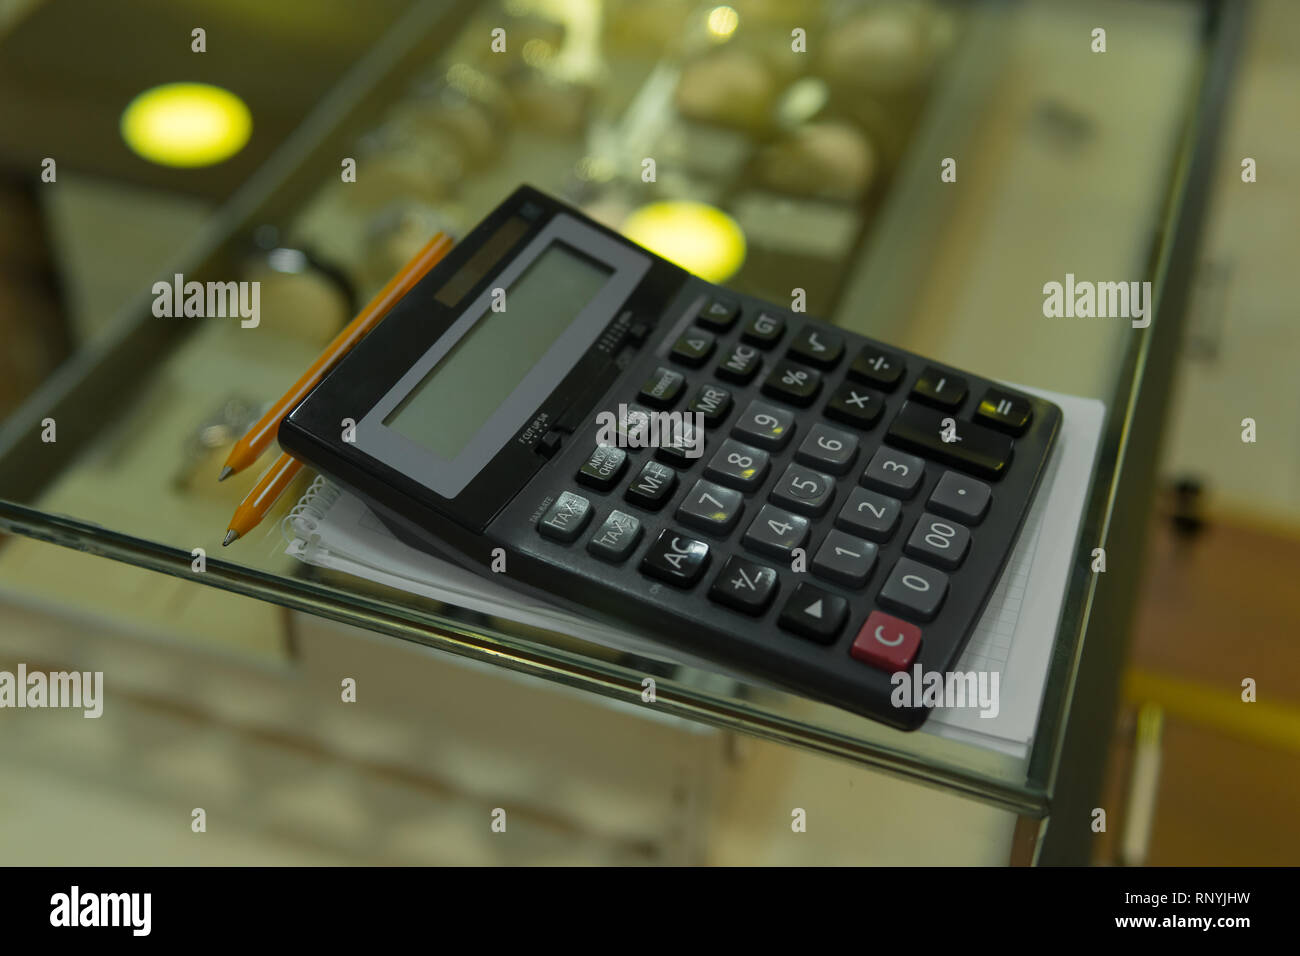 Calculator on glass showcase closeup, business concept. Money saving,  calculate sale price, shop financial budget Stock Photo - Alamy